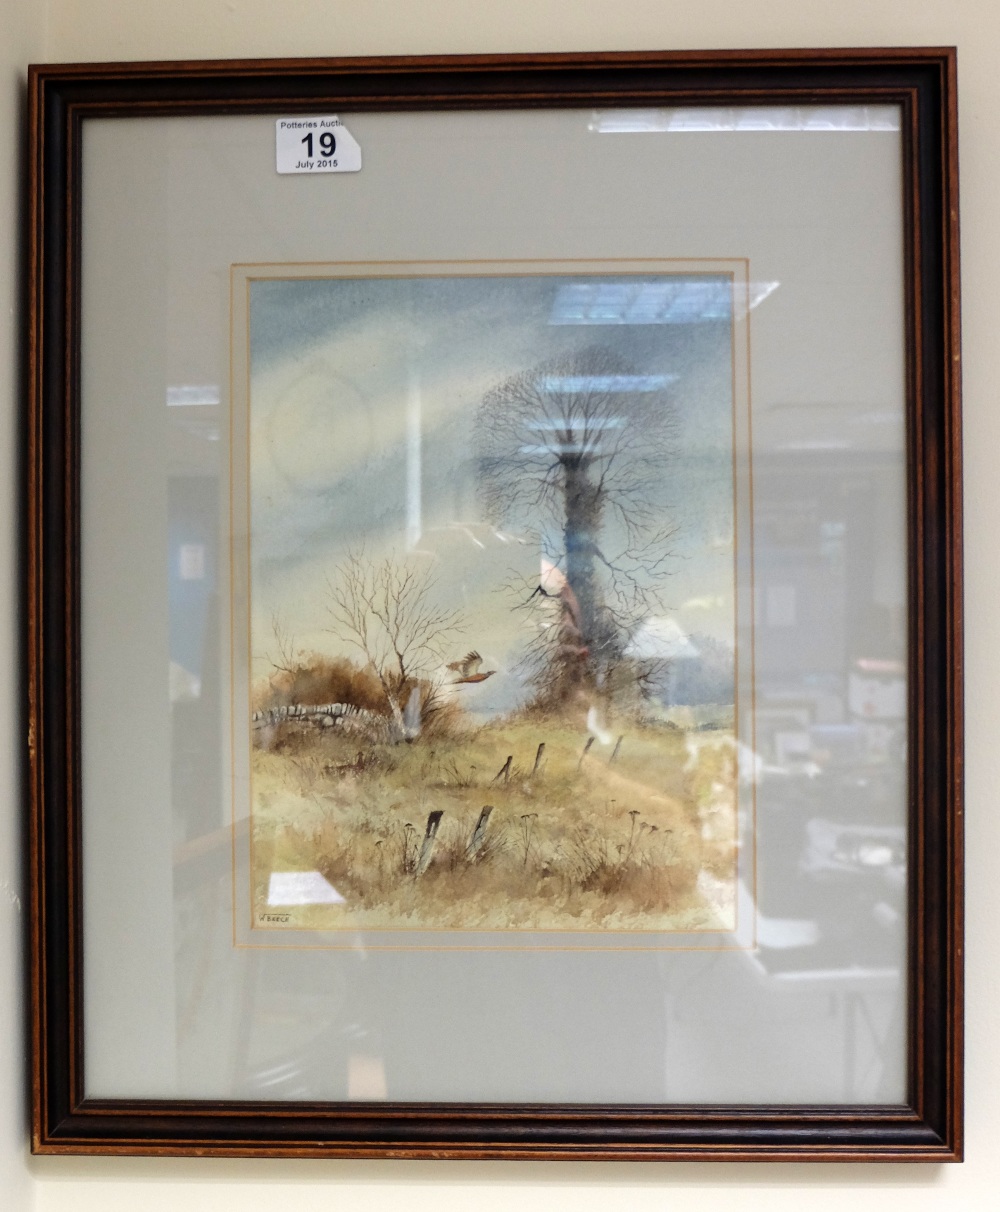 Framed landscape watercolour scene of a